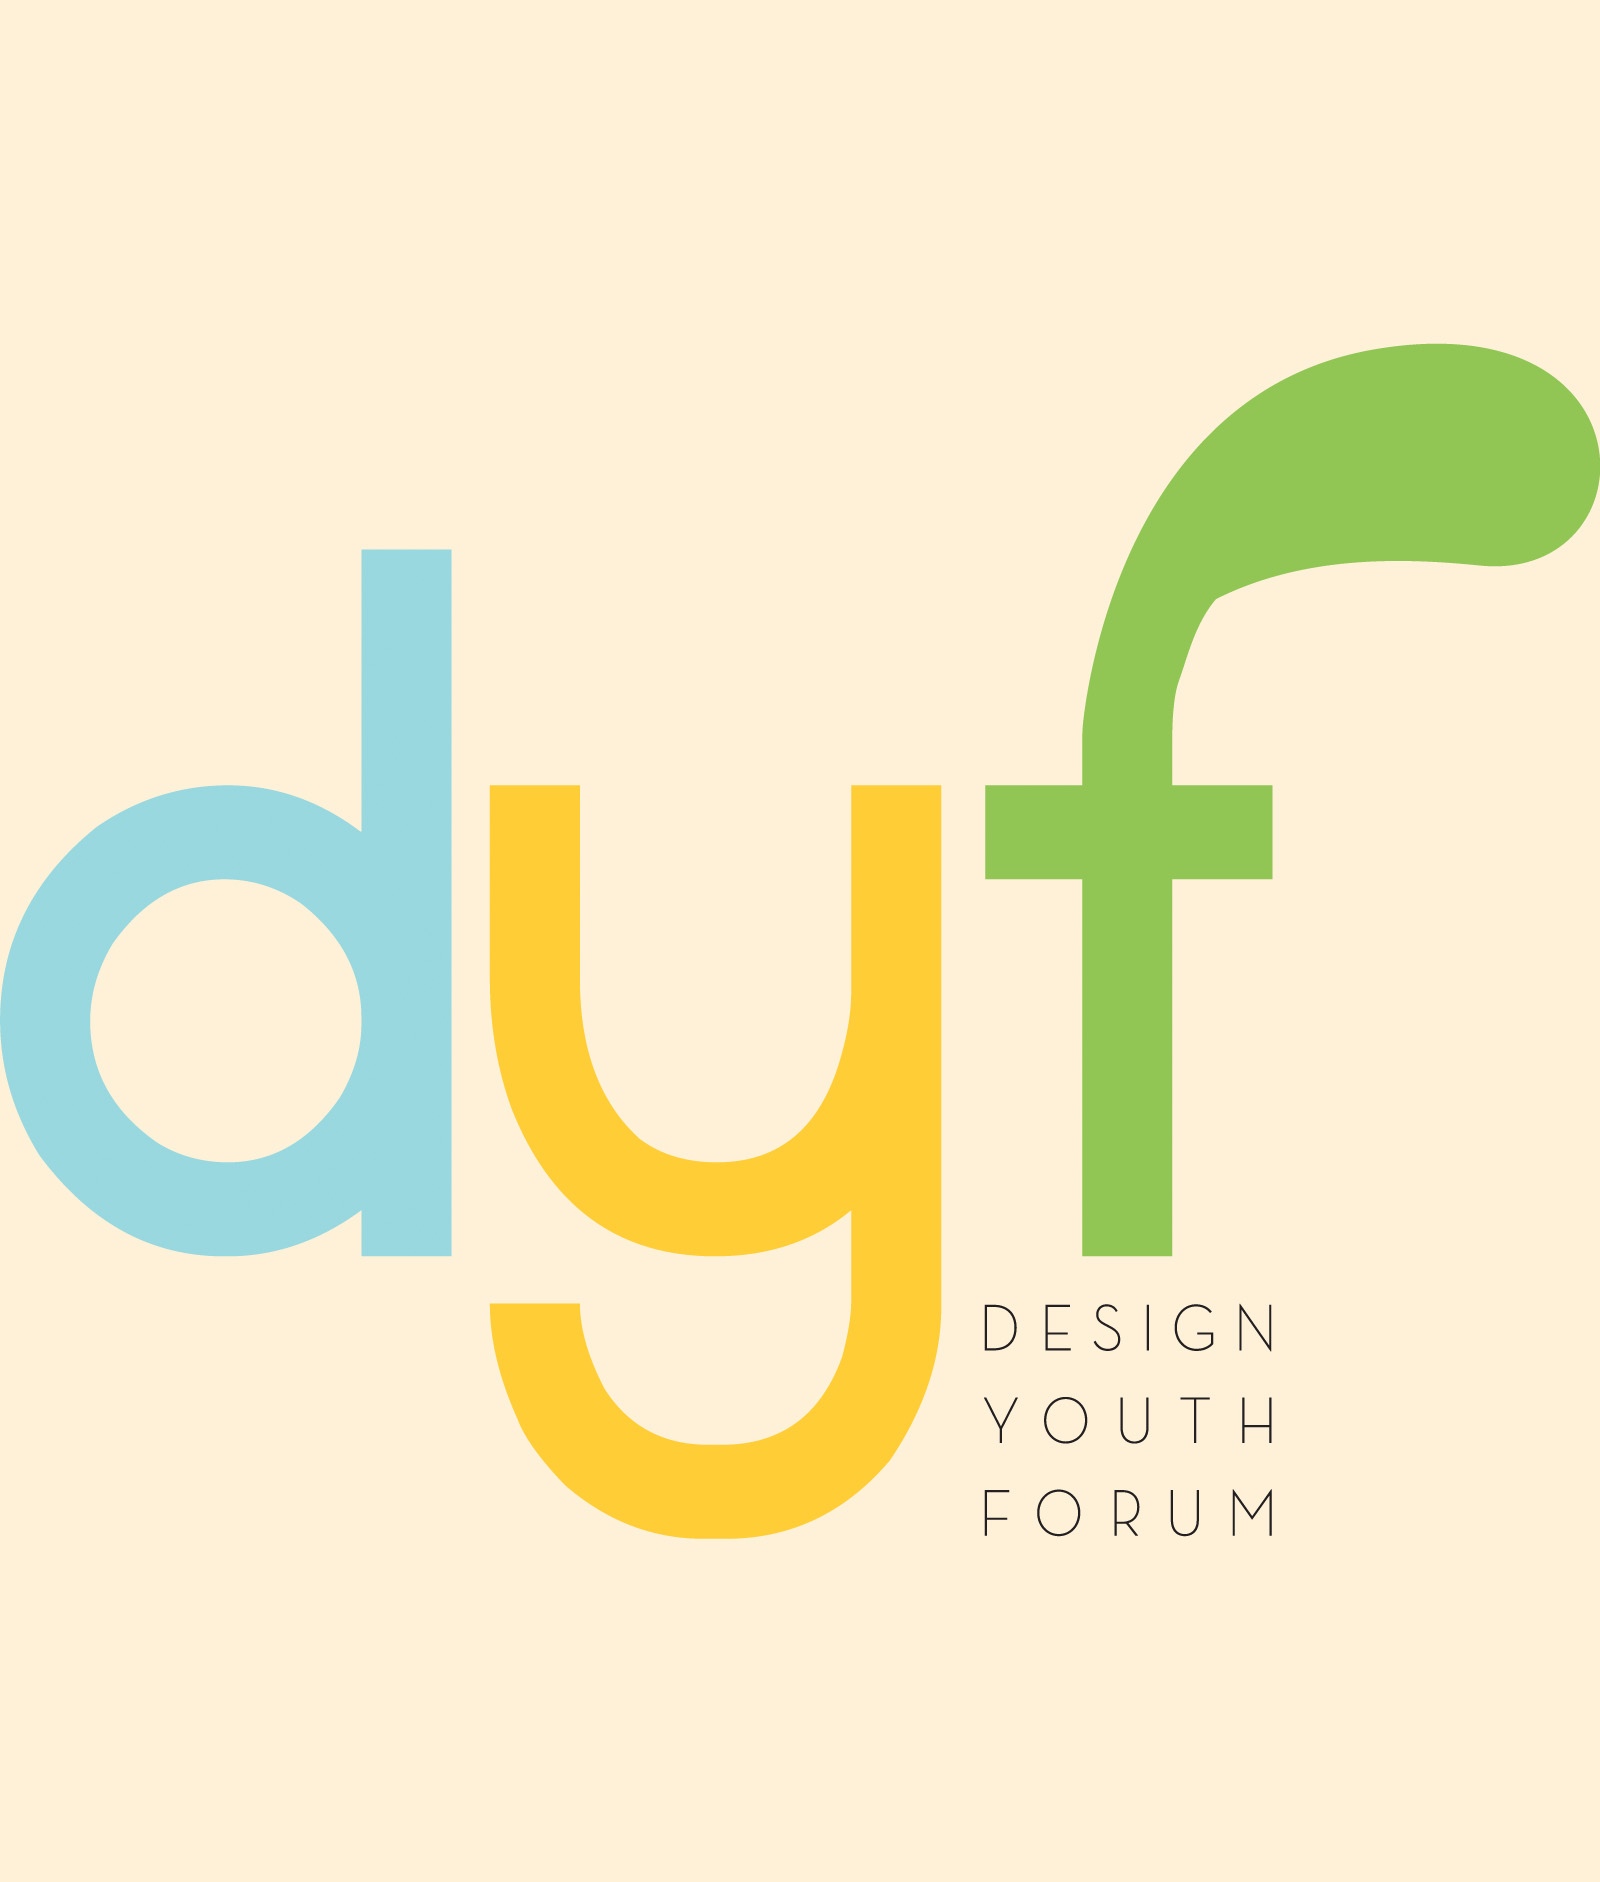 Design Youth Forum